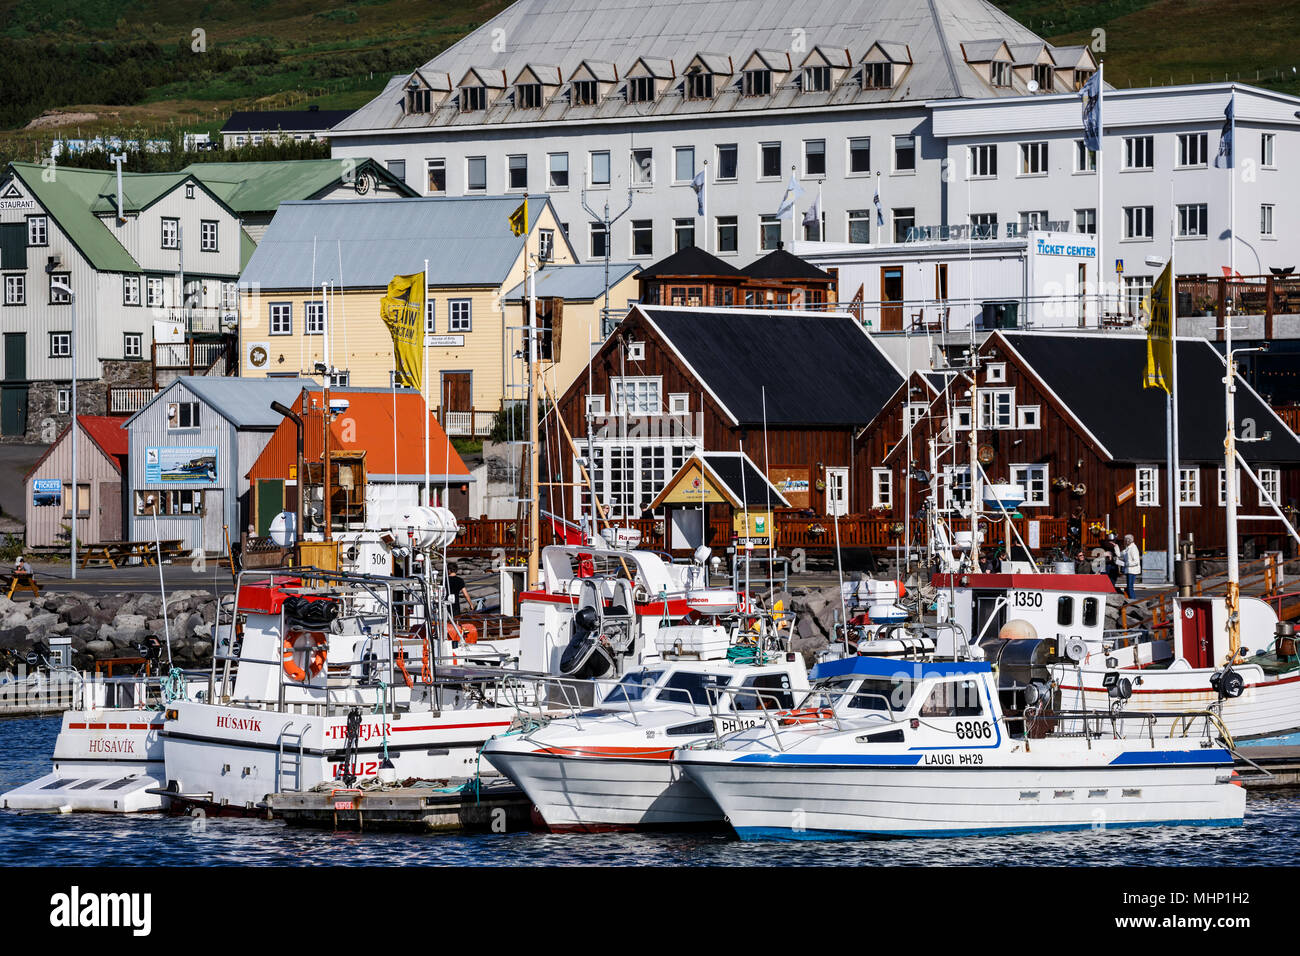 Boats and colorful buildings, Husavik Harbor, Husavik, Iceland Stock Photo